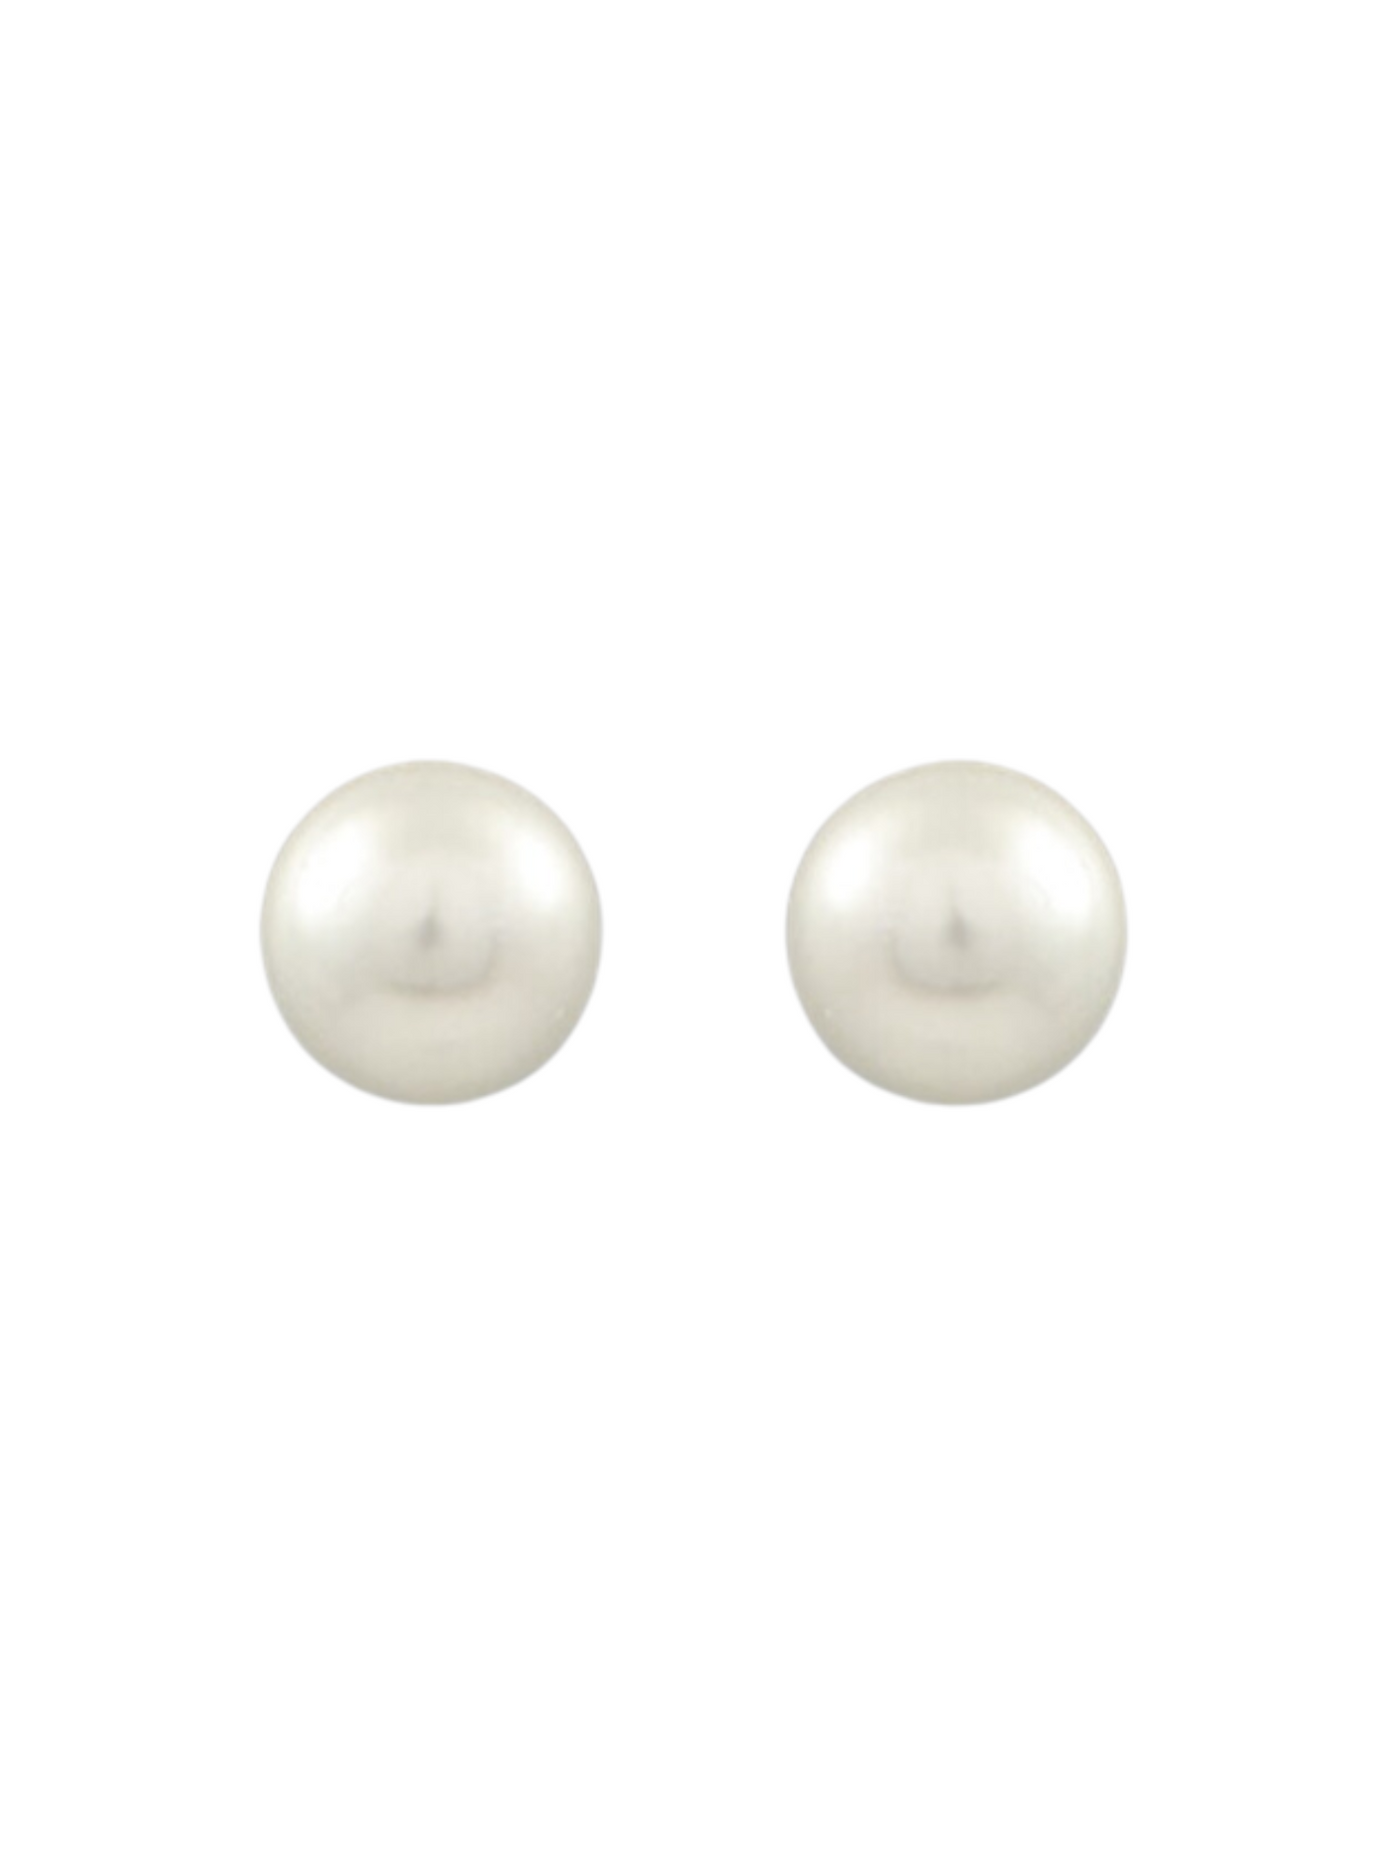 18mm Pearl Stud Earrings on white background.